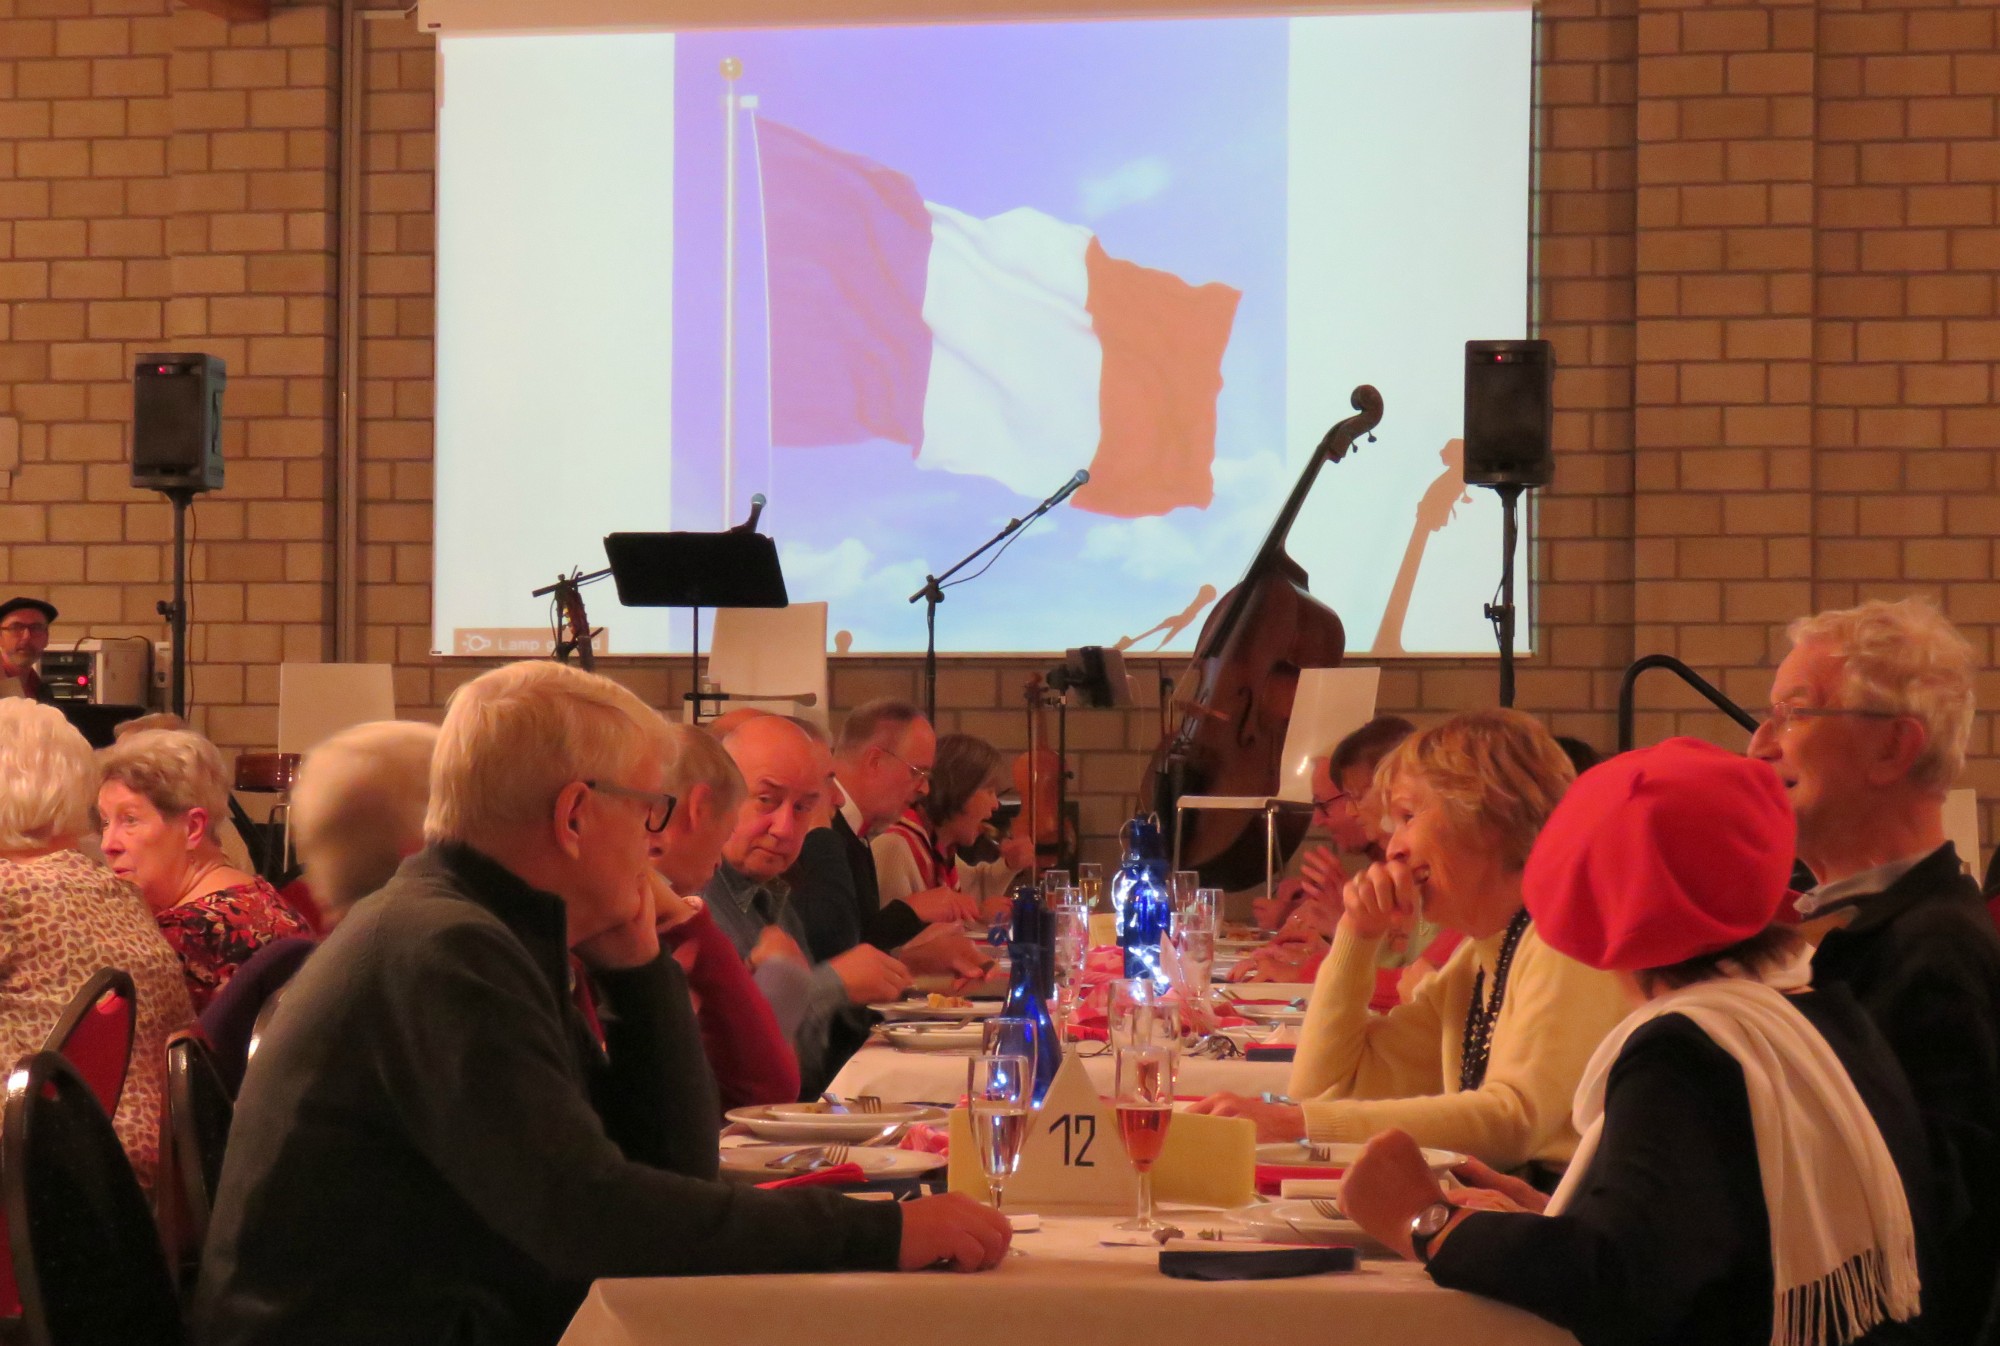 Fête d'hiver| Thema Frankrijk | Brasserie Croque-Notes met repertoire van Georges Brassens